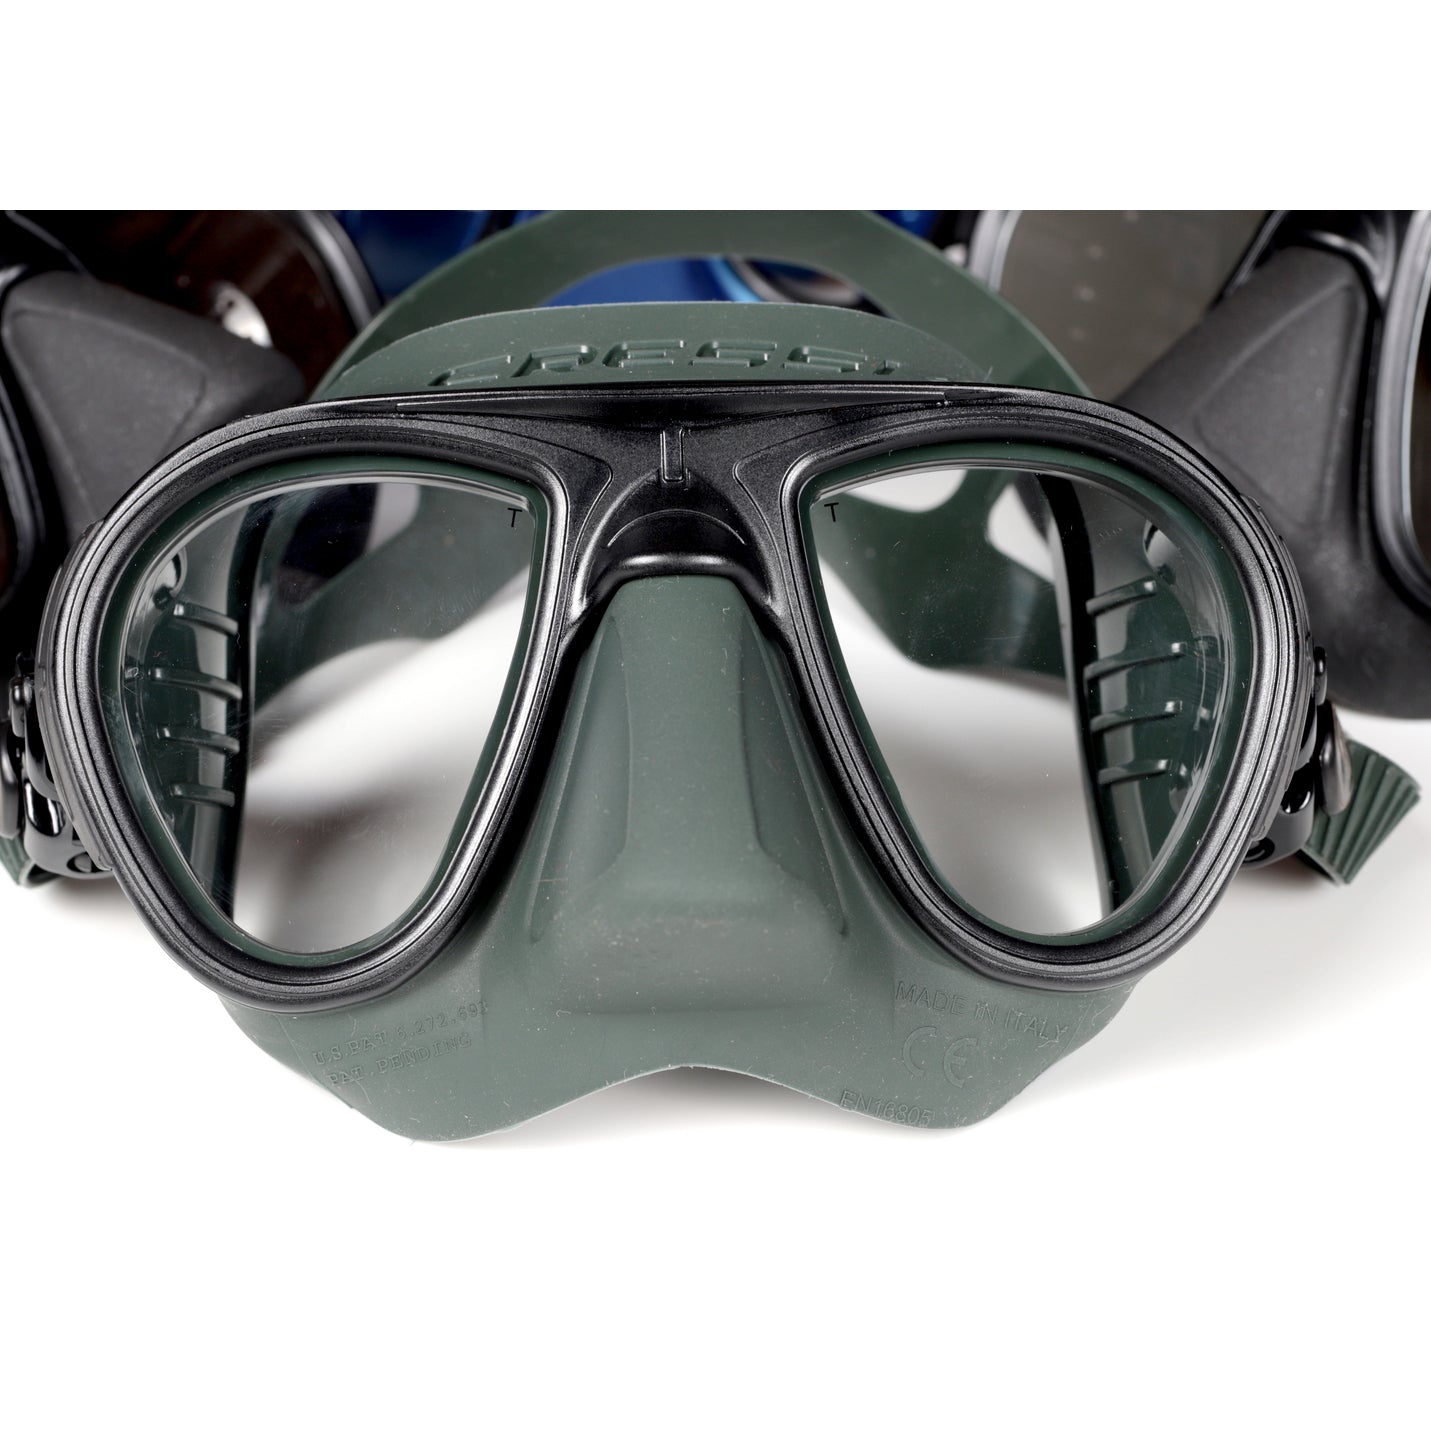 Cressi Calibro + Corsica Mask Set - Military Green